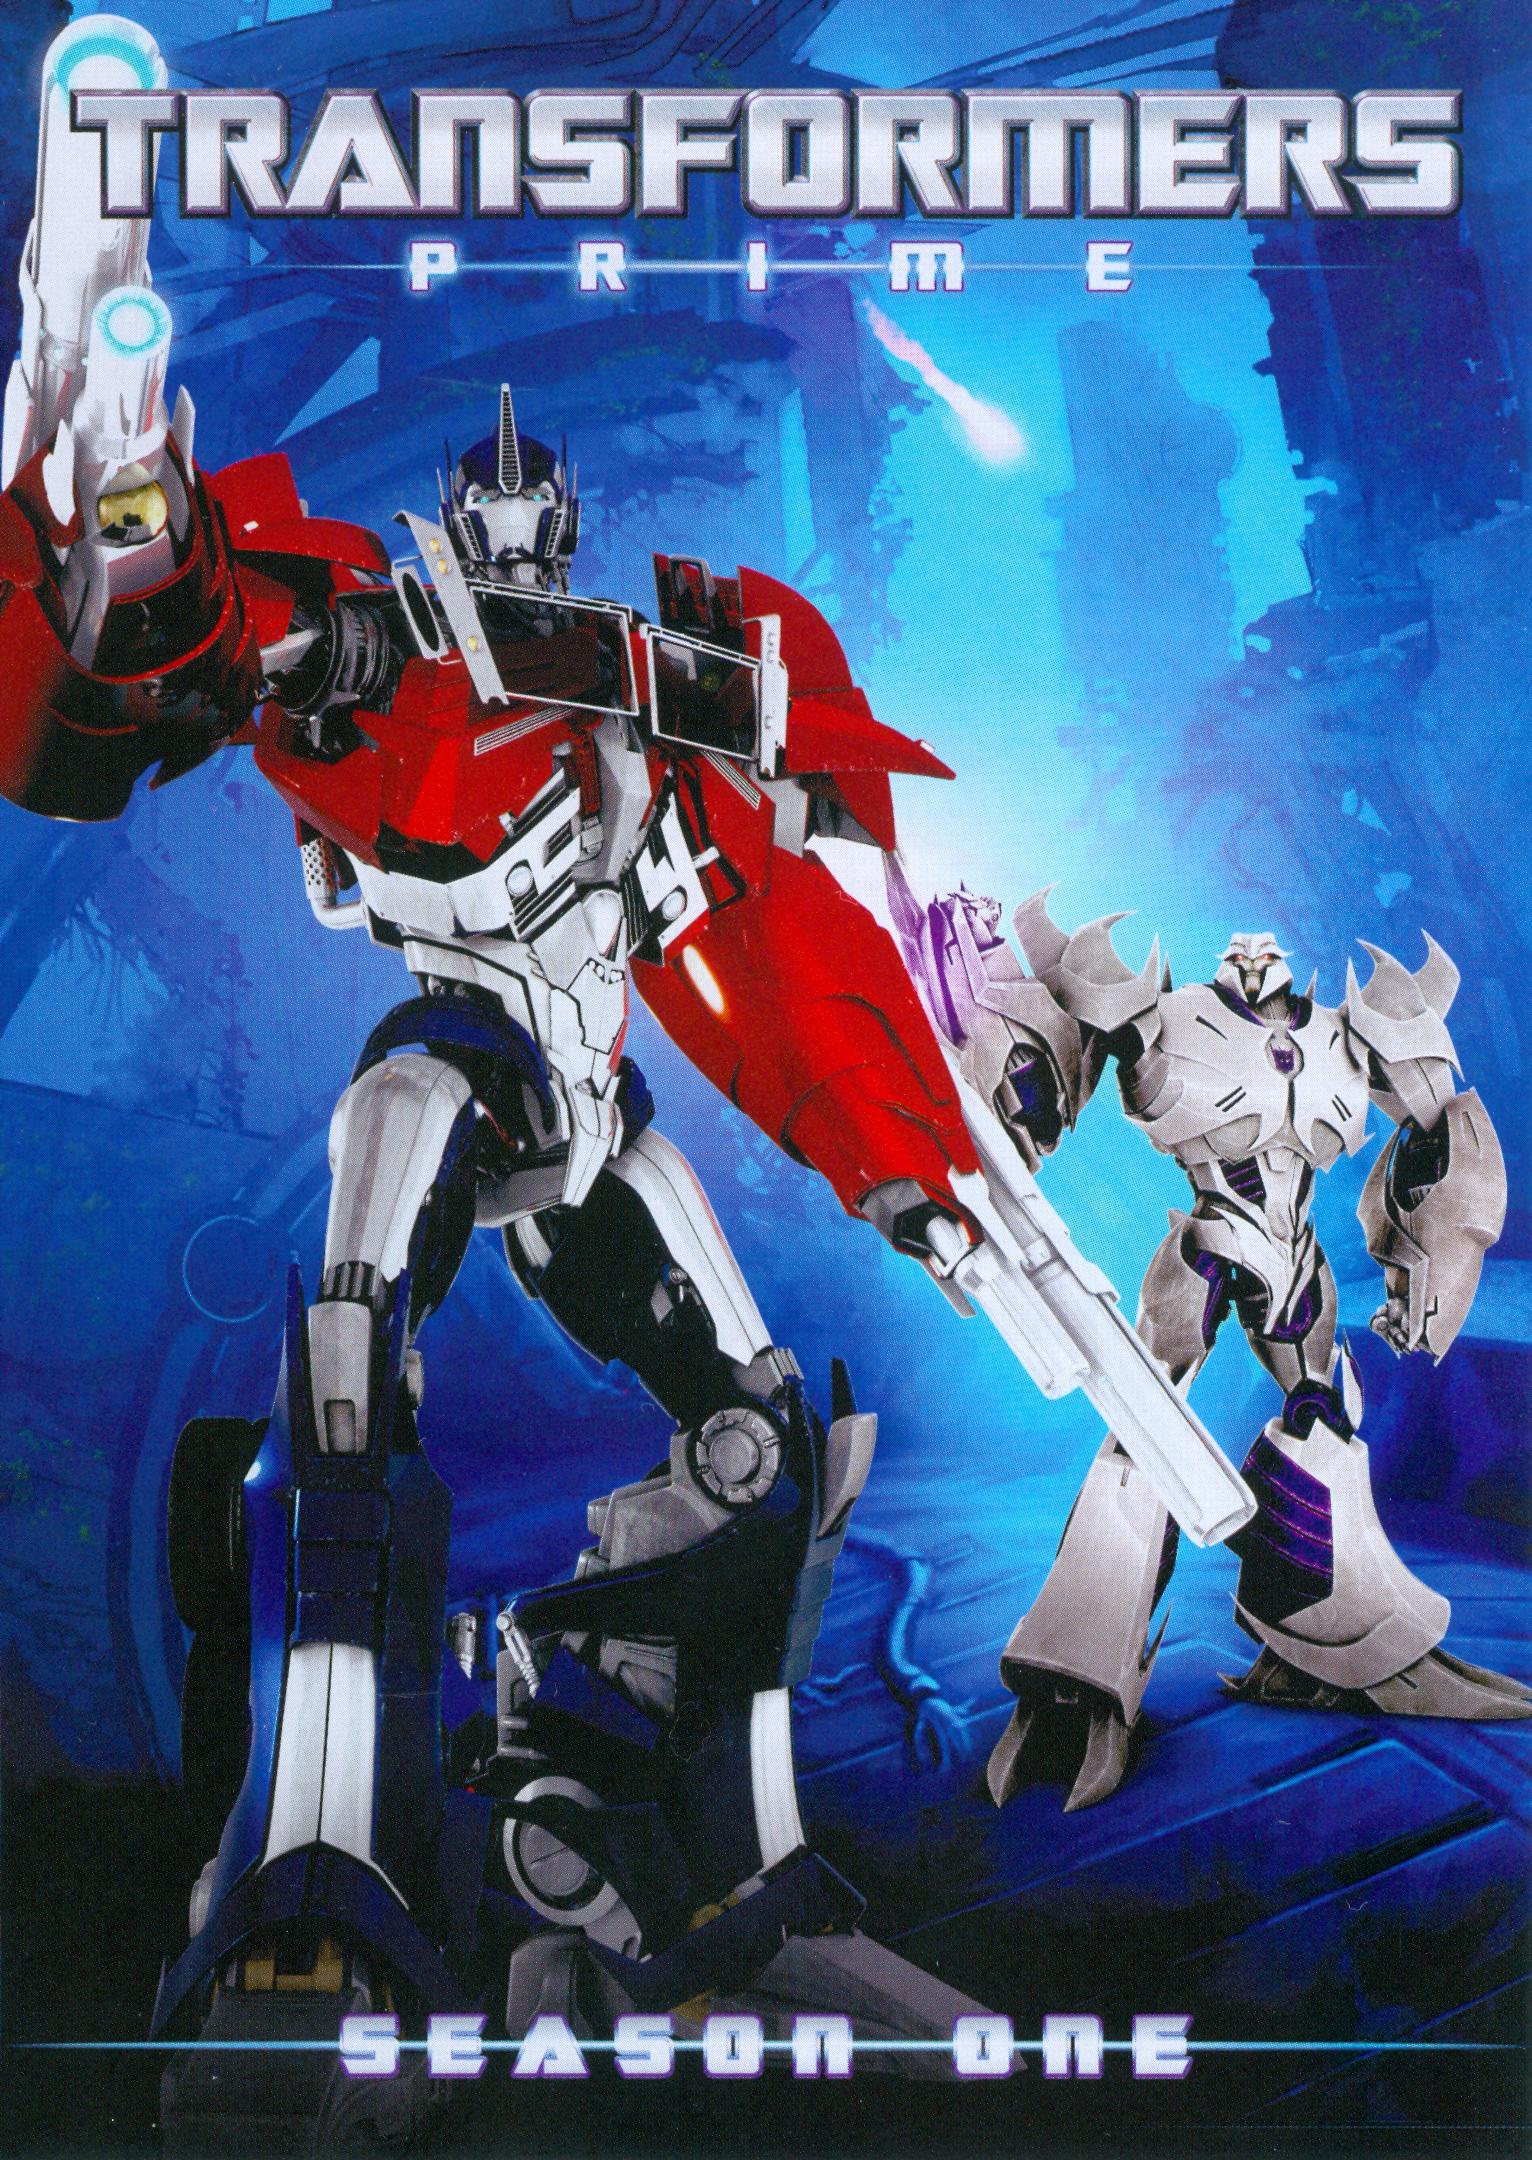 Transformers Prime: Season One [4 Discs] - Best Buy